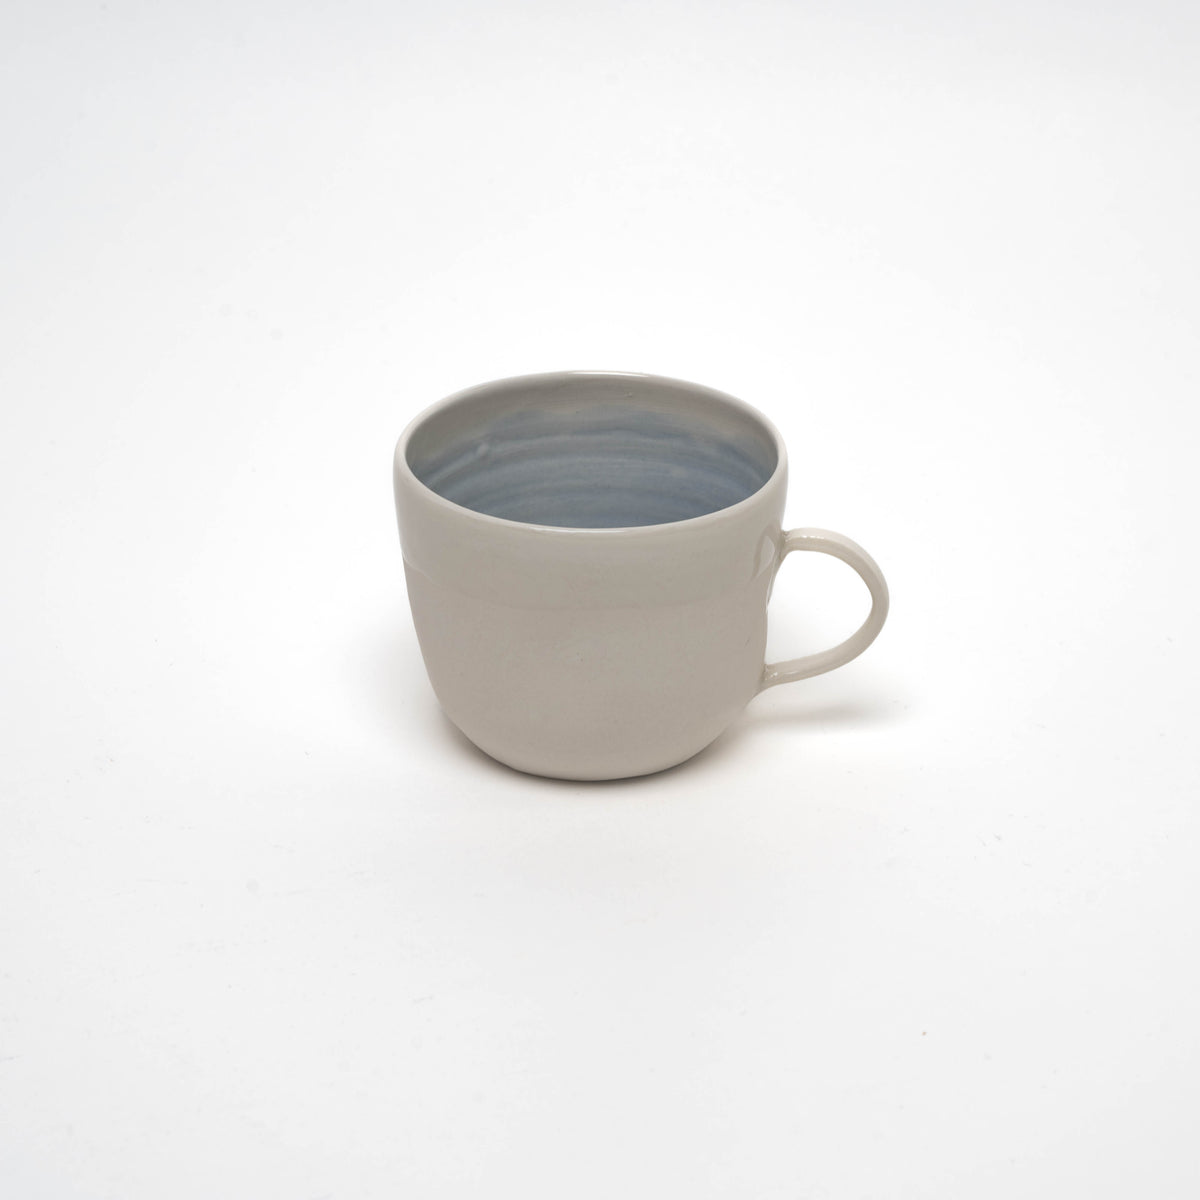 Kaffee- Teetasse aus Porzellan